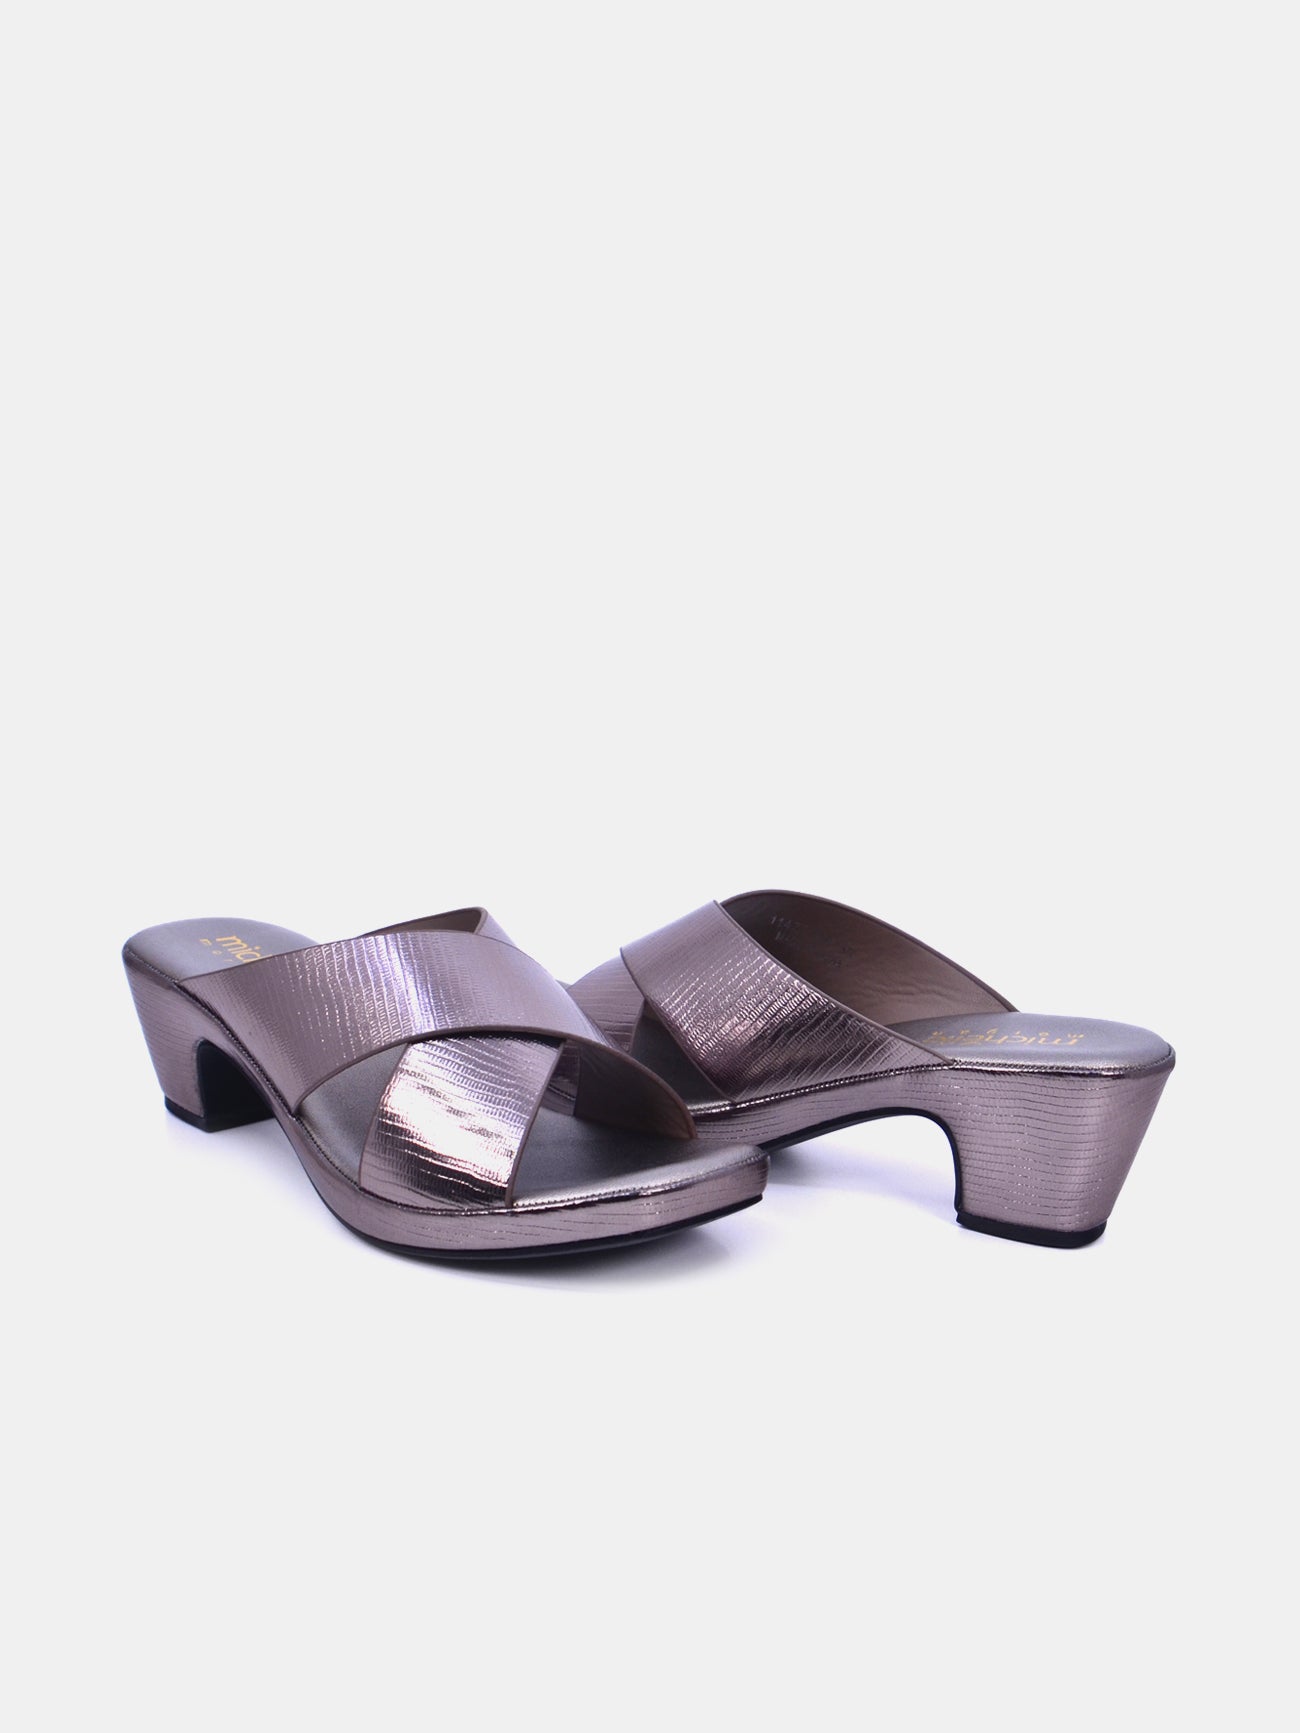 Michelle Morgan 114ZD126 Women's Heeled Sandals #color_Grey